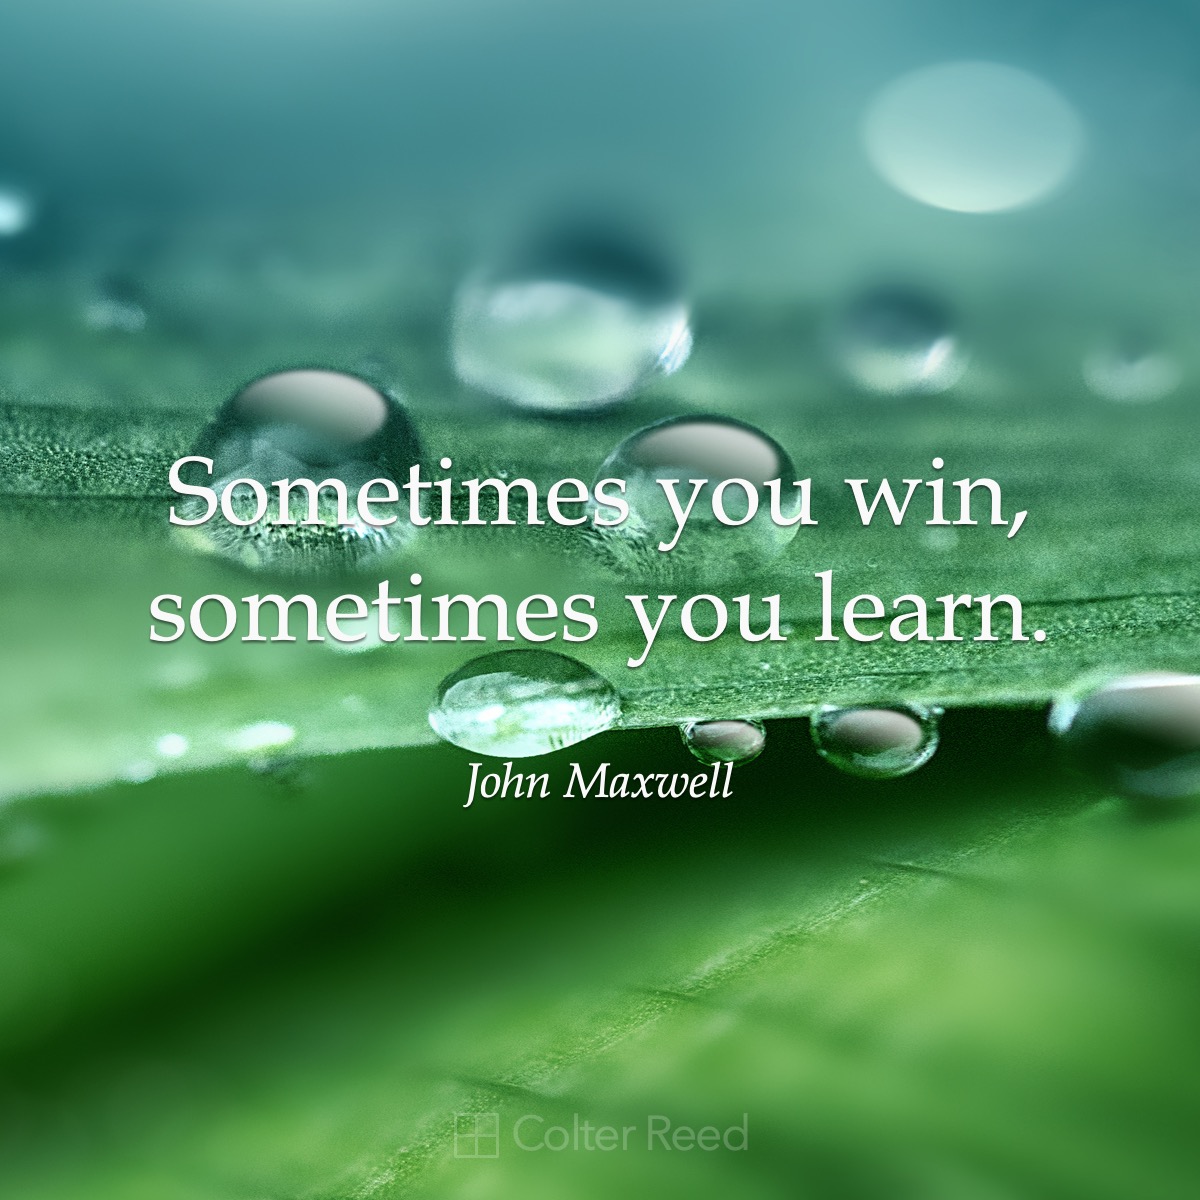 Sometimes you win, sometimes you learn. —John Maxwell